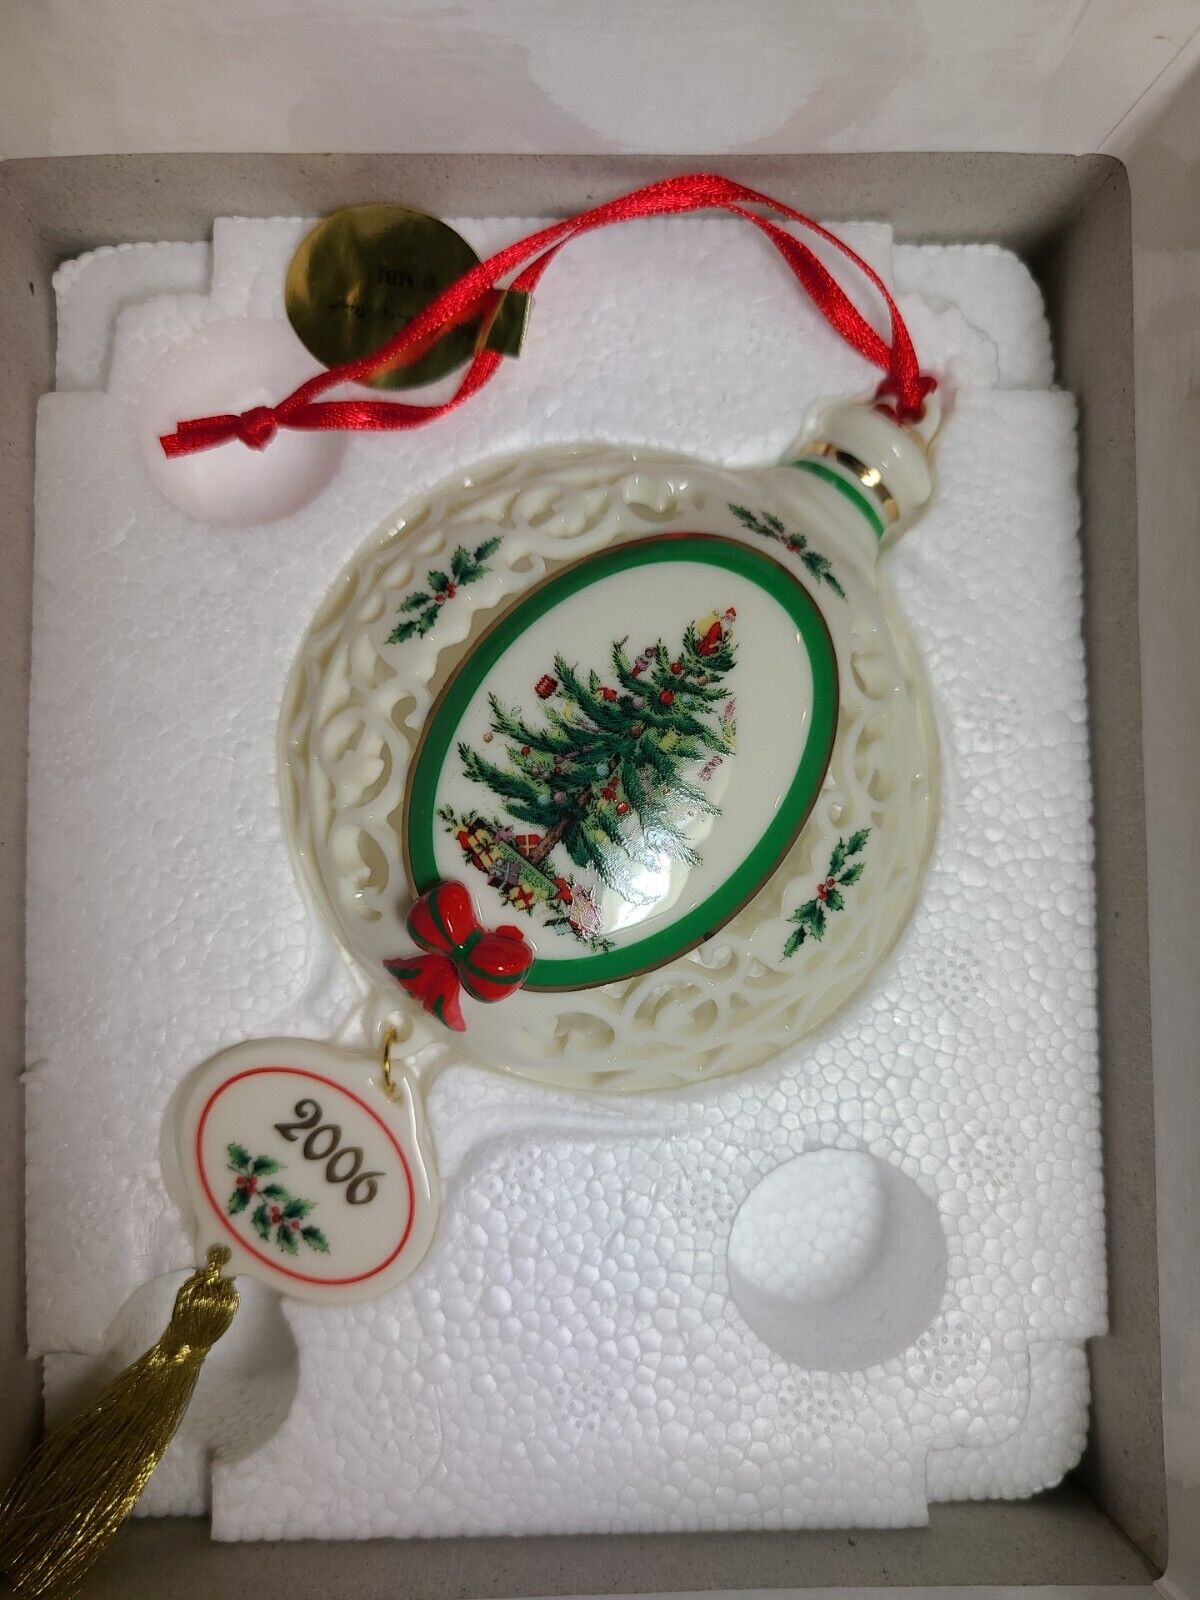 2006 Spode Annual Christmas Tree Ornament Danbury Mint Pierced Design W Box